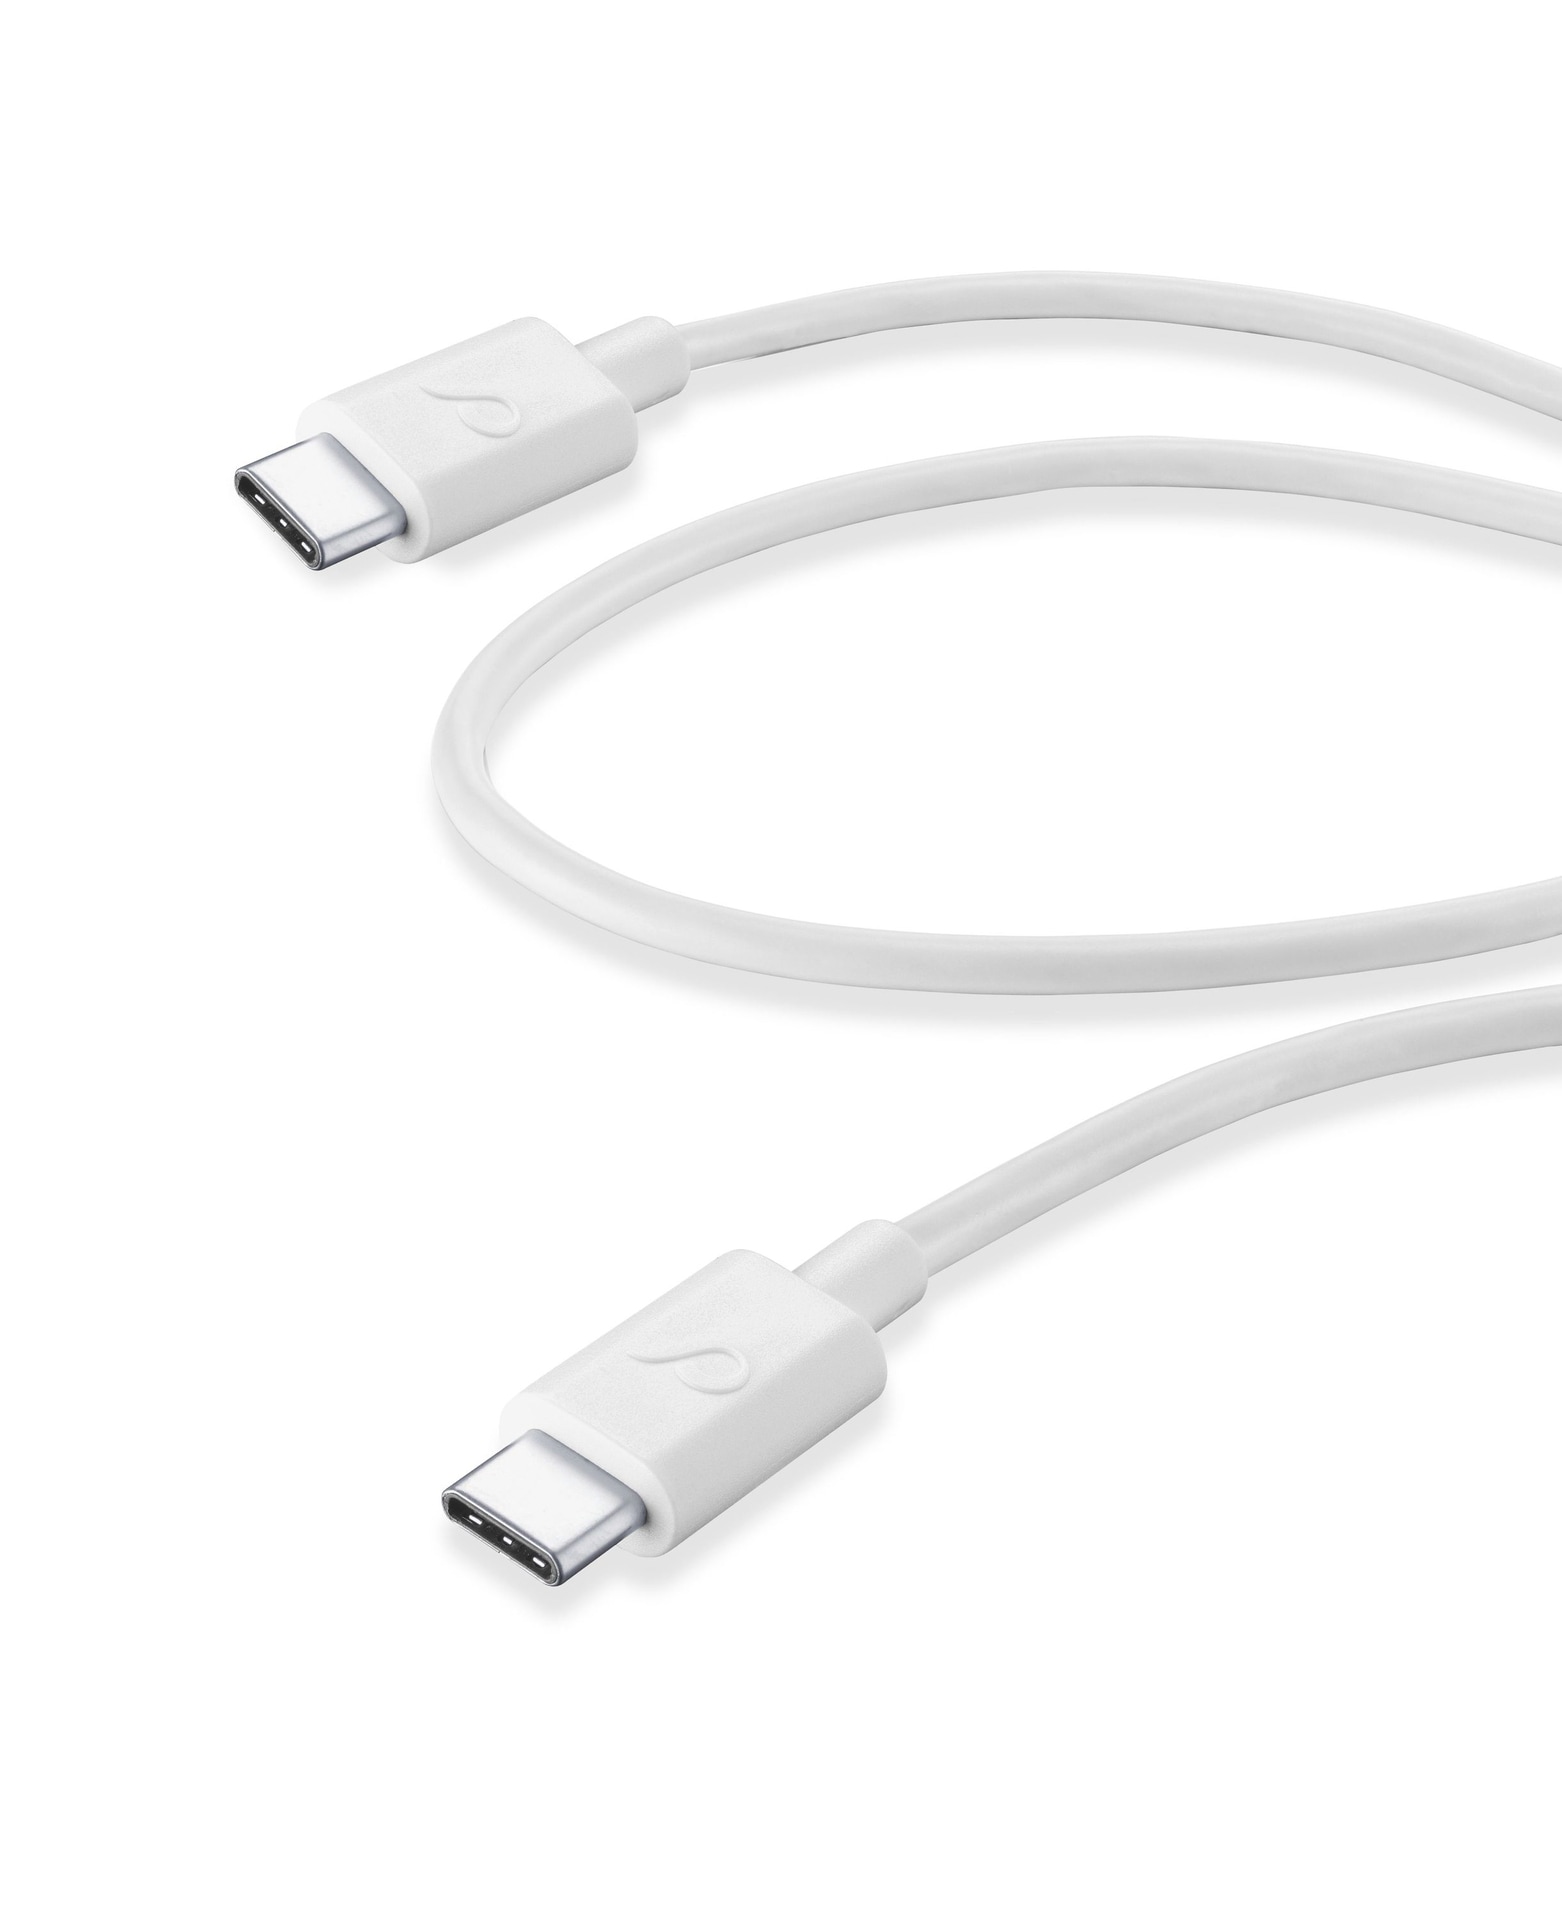 Cellularline USB-Kabel »Power Data Cable 0,6 m USB Typ-C / Typ-C«, USB Typ C-USB Typ C, 60 cm